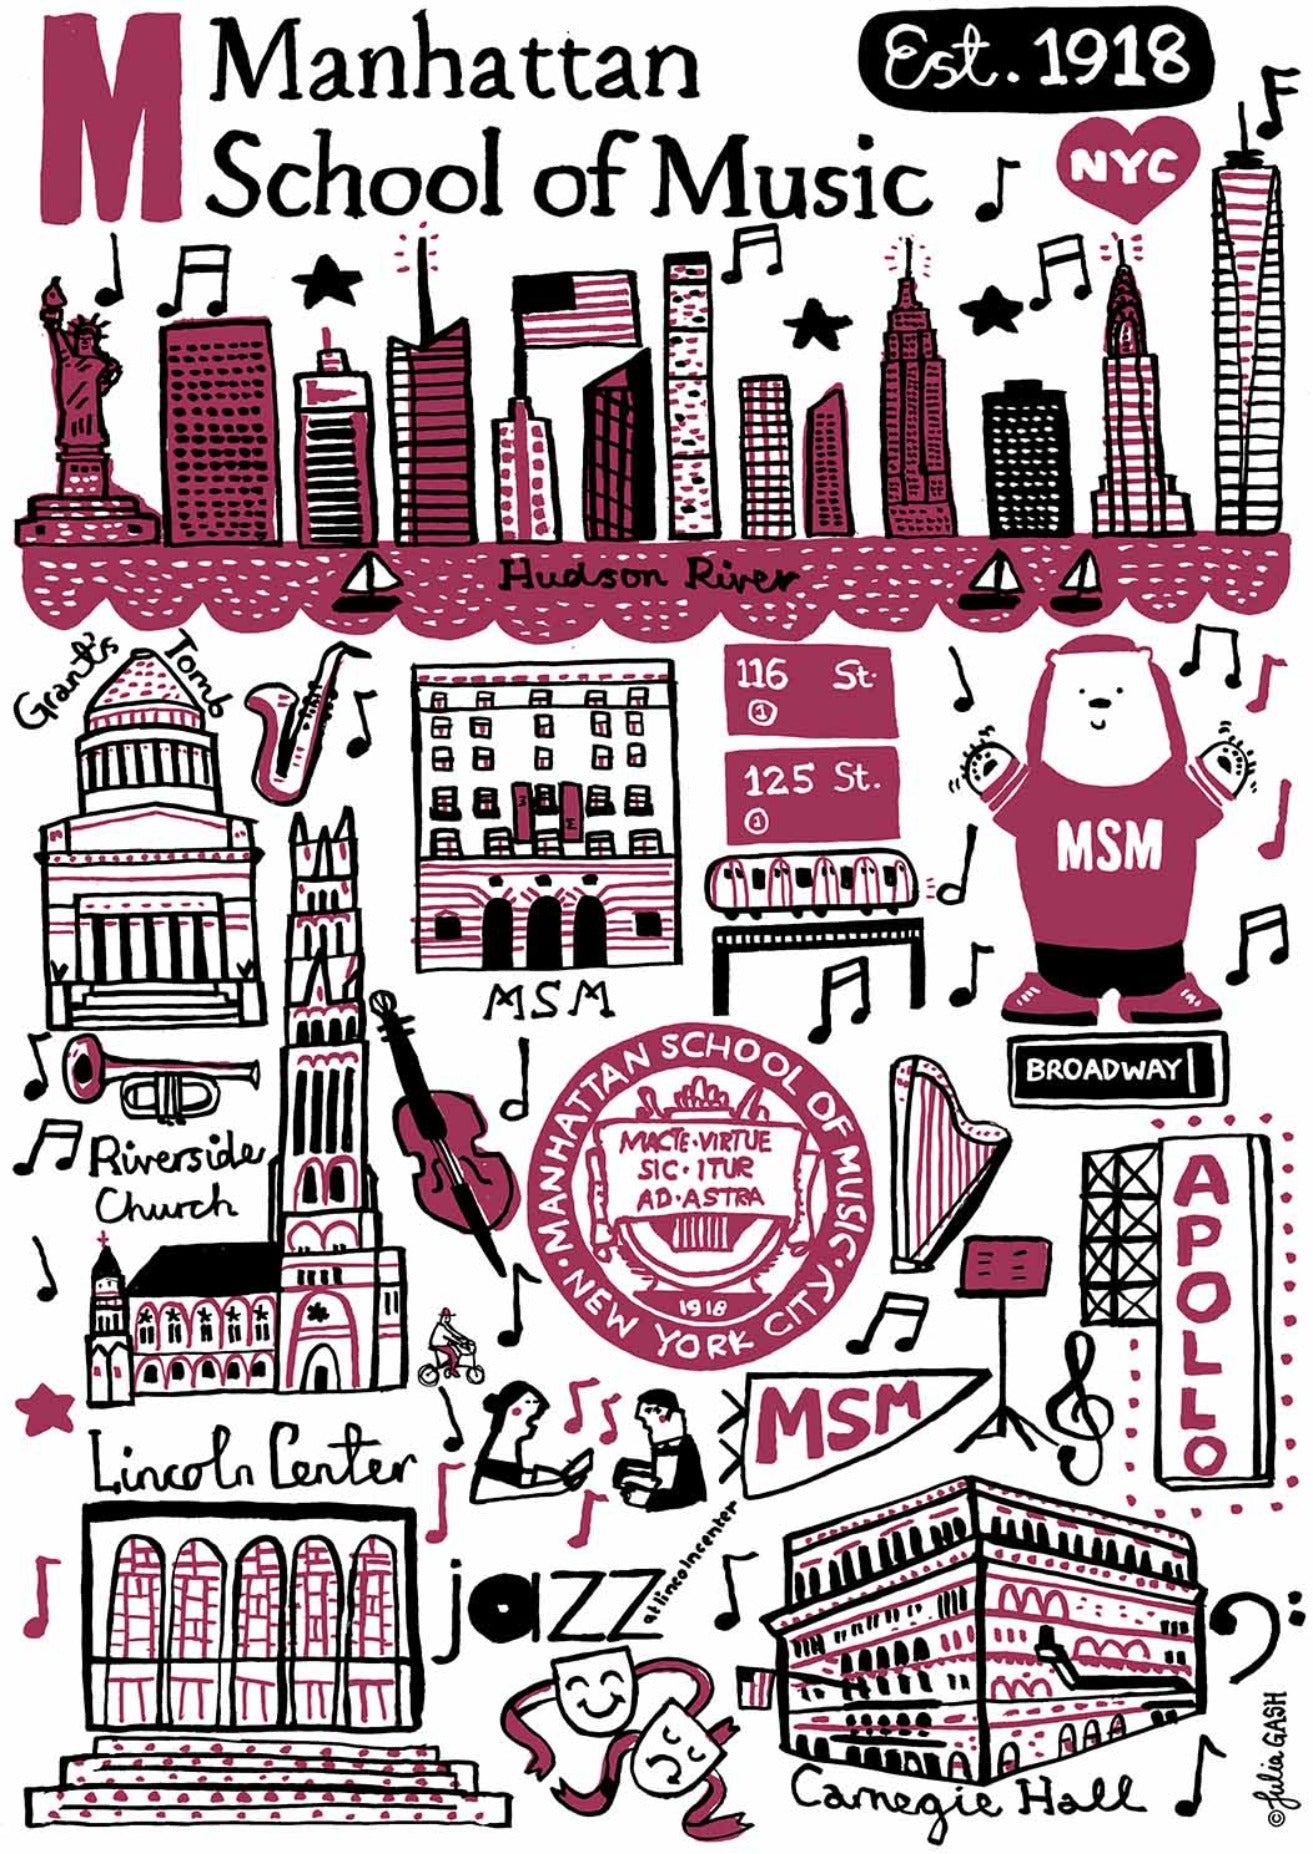 Manhattan School of Music by Julia Gash